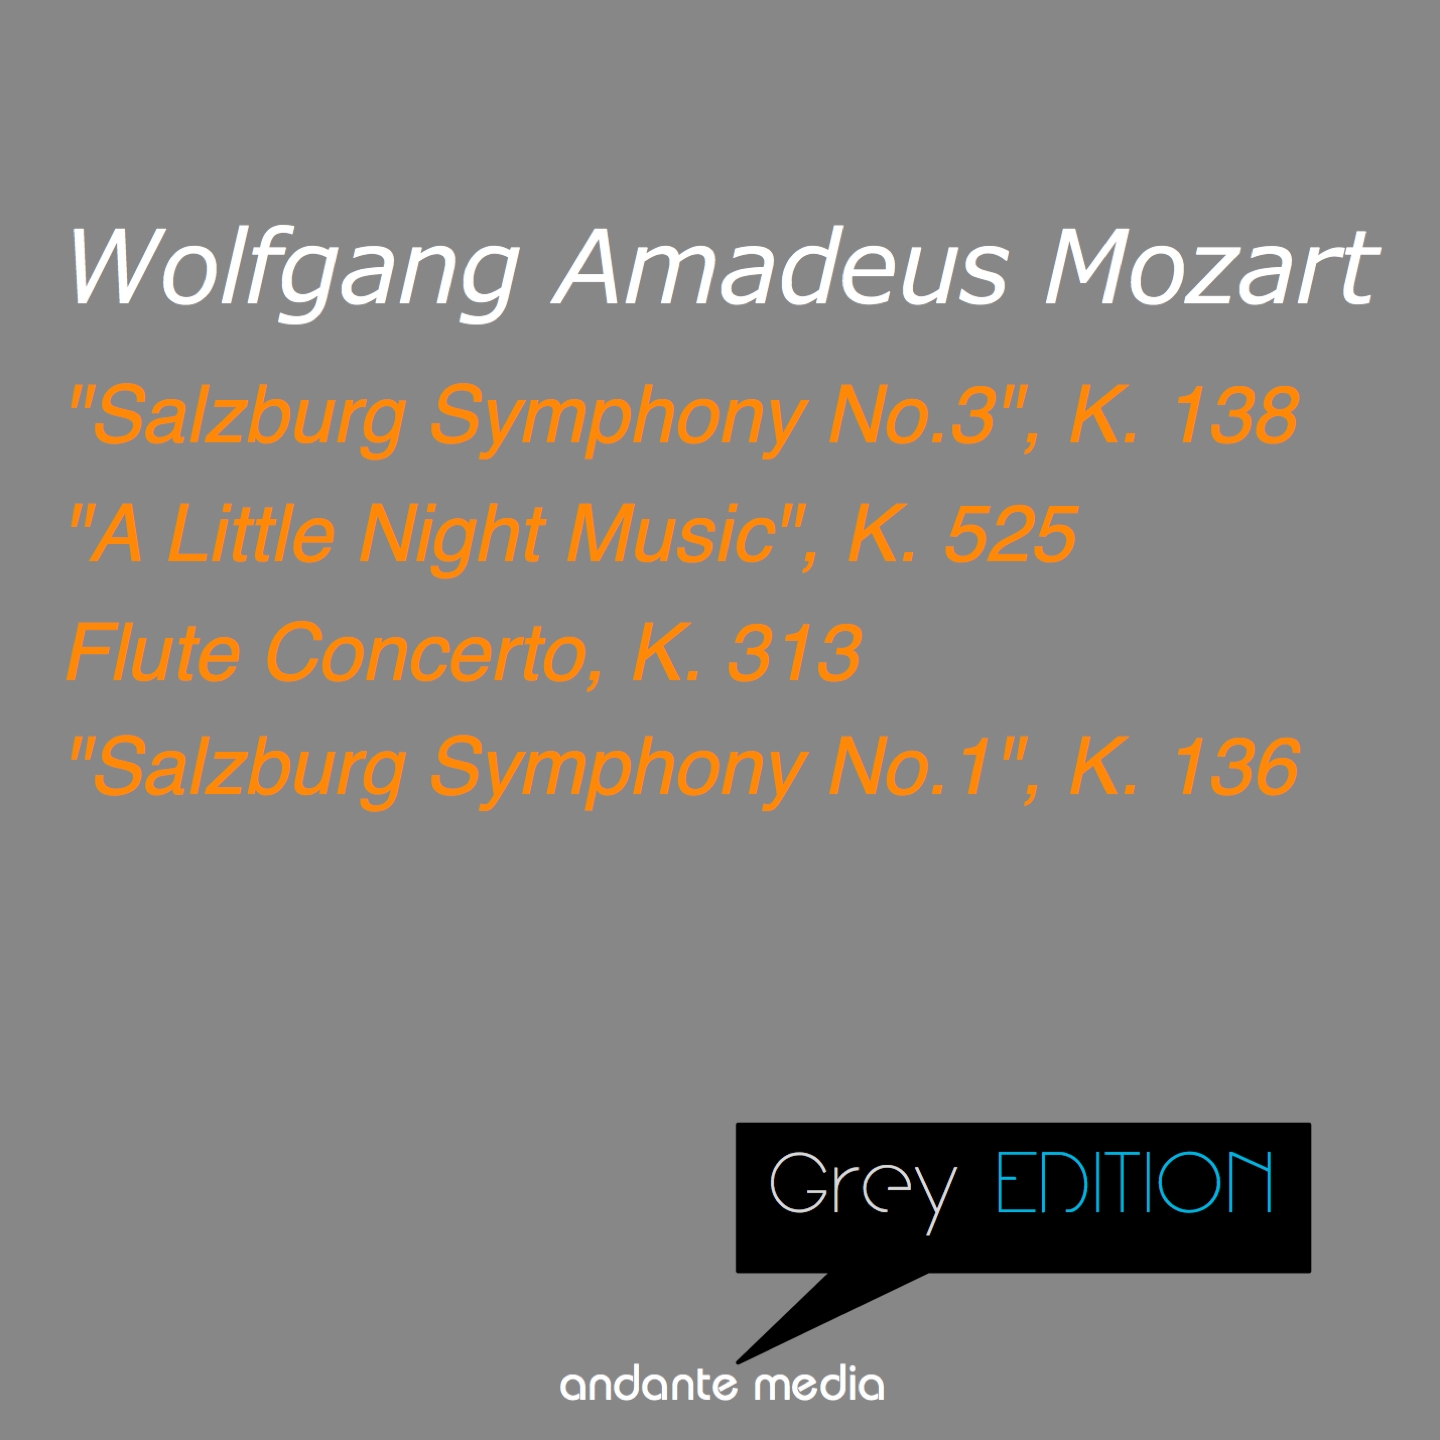 Grey Edition - Mozart: "A Little Night Music", K. 525 & Salzburg Symphonies Nos. 1, 3